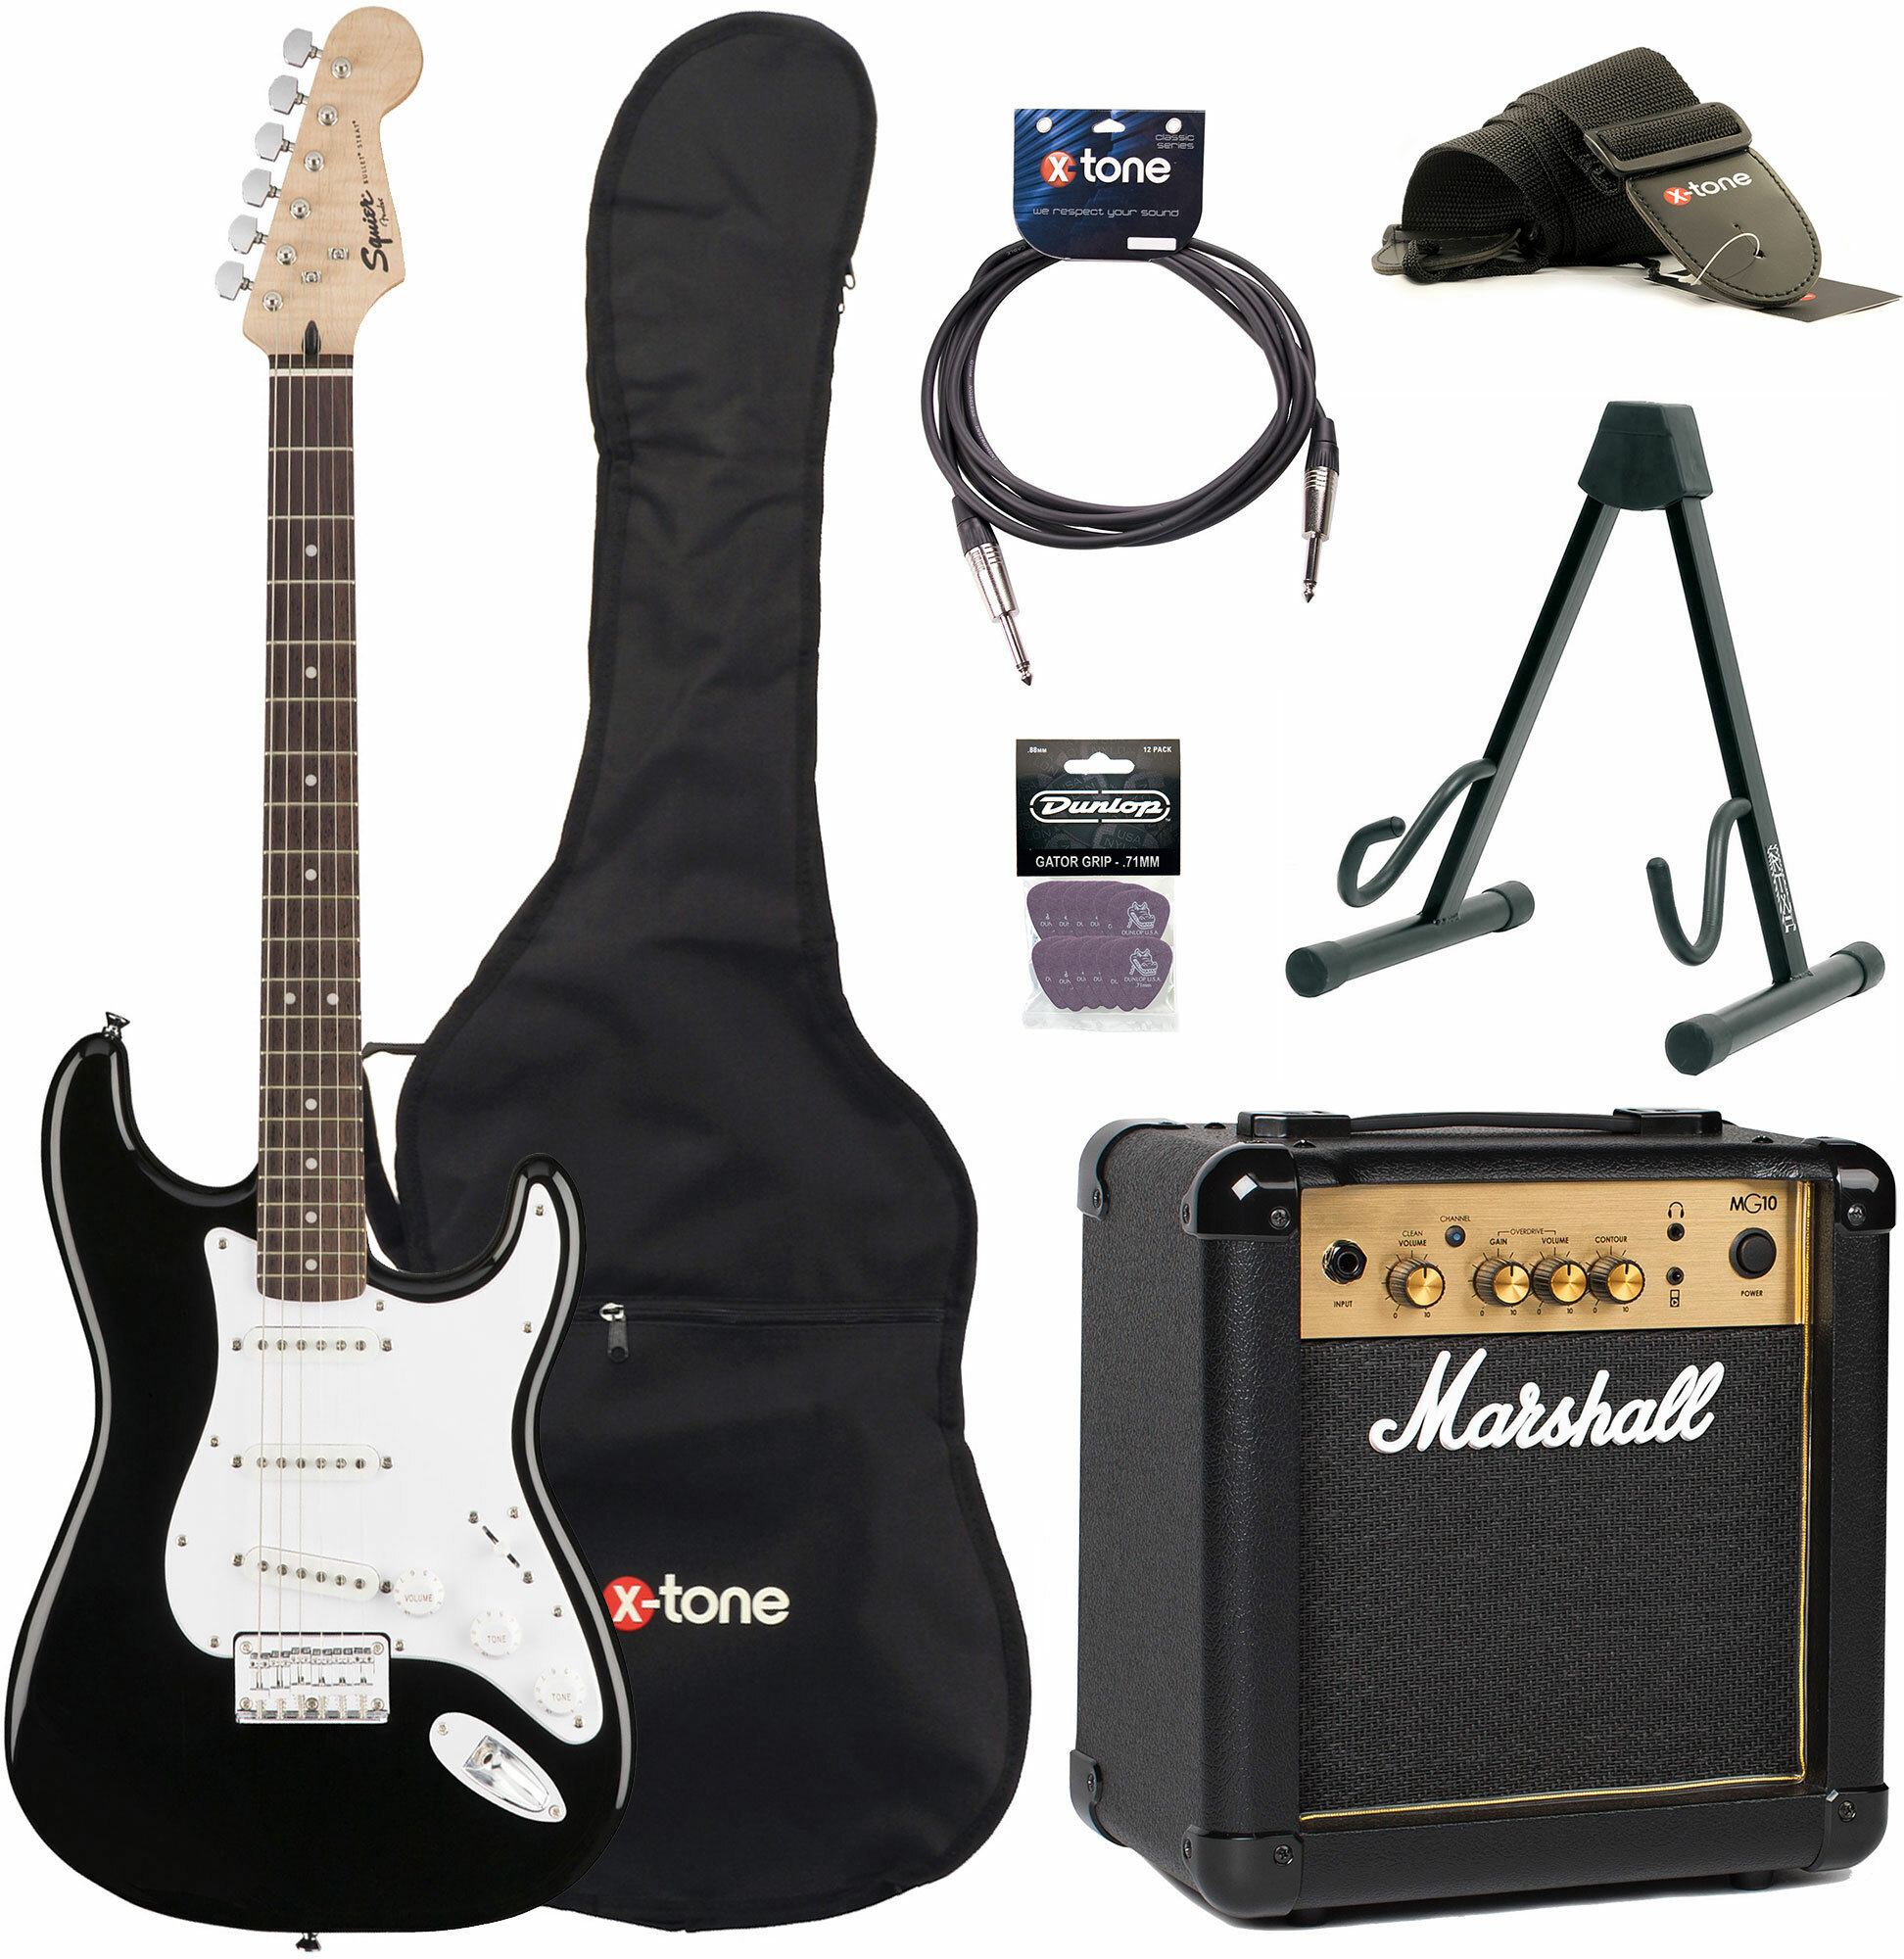 Squier Strat Bullet Ht Hss + Marshall Mg10g + X-tone Access - Black - E-Gitarre Set - Main picture